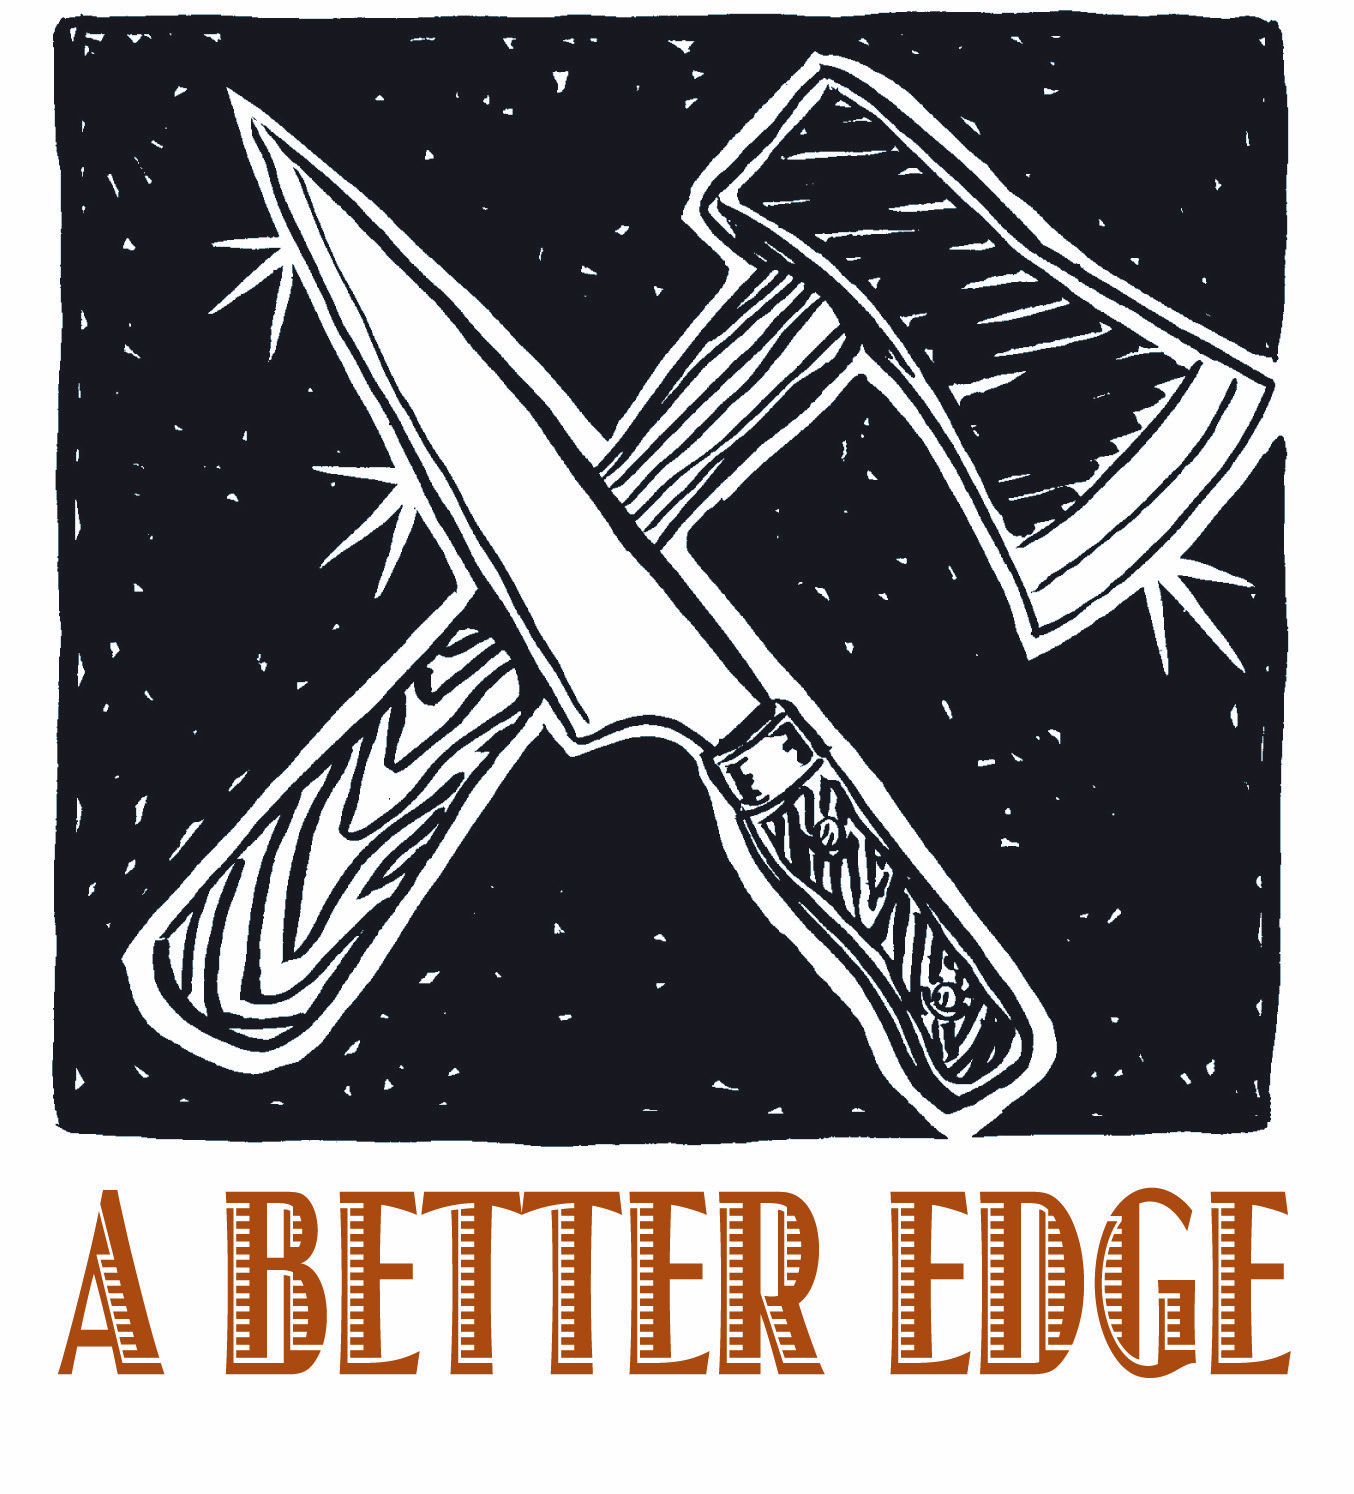 black and white logo showing sharp knife and hatchet